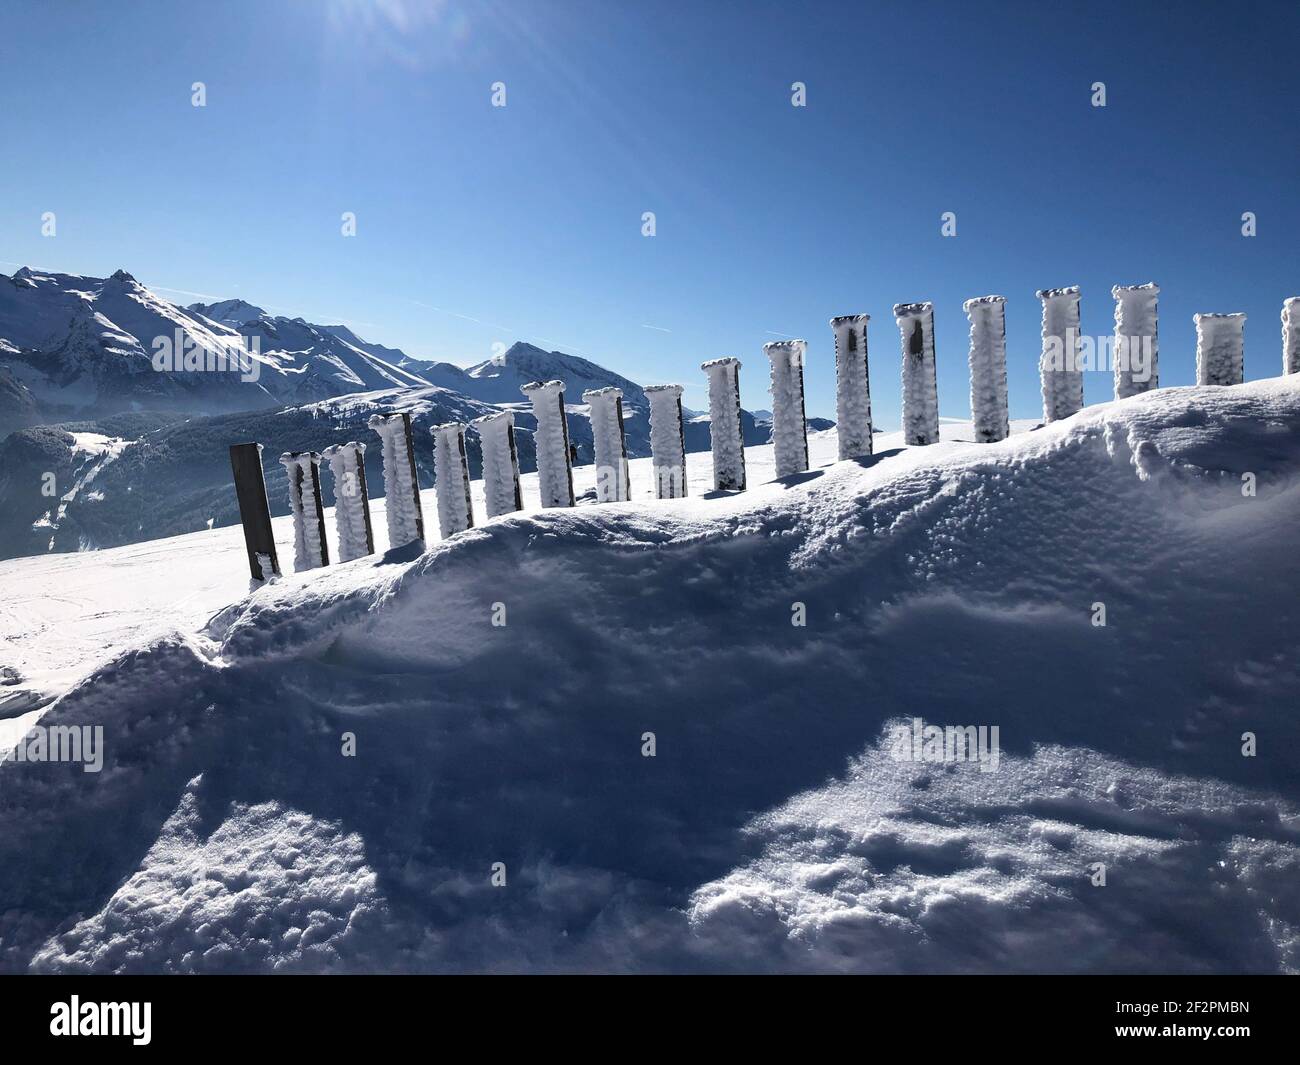 Bergeralm ski area, winter landscape, winter panorama, nature, wooden fence, Wipptal, Brenner Pass, Innsbruck, Steinach am Brenner, Tyrol, Austria Stock Photo